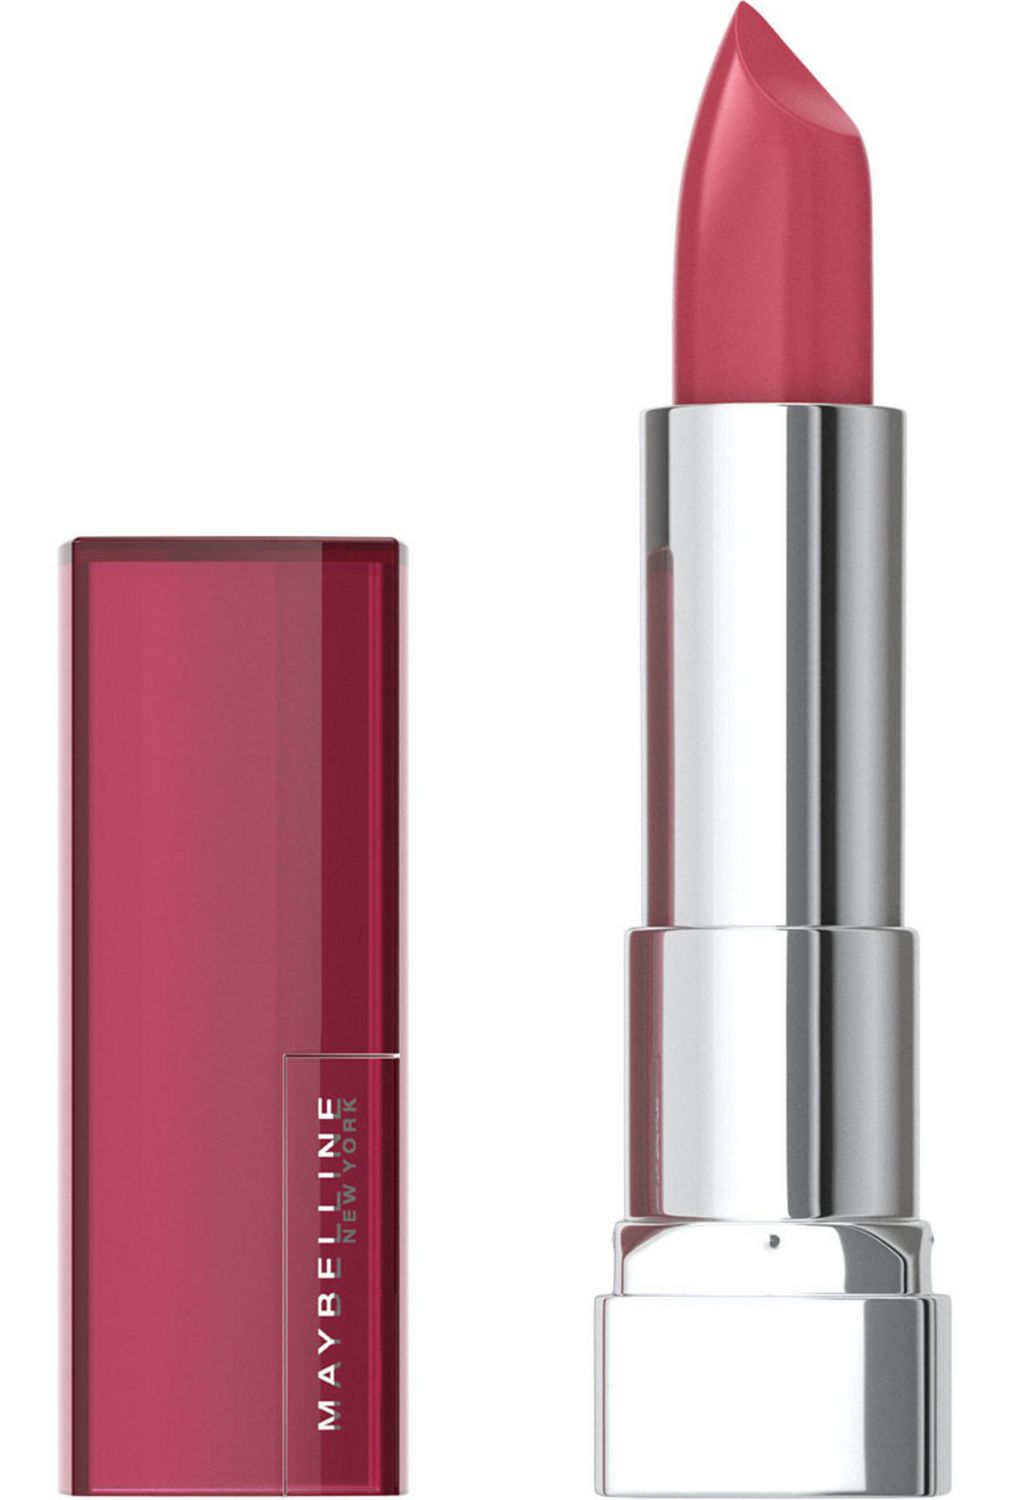 The Creams, Cream Finish Lipstick Makeup | Walmart Canada